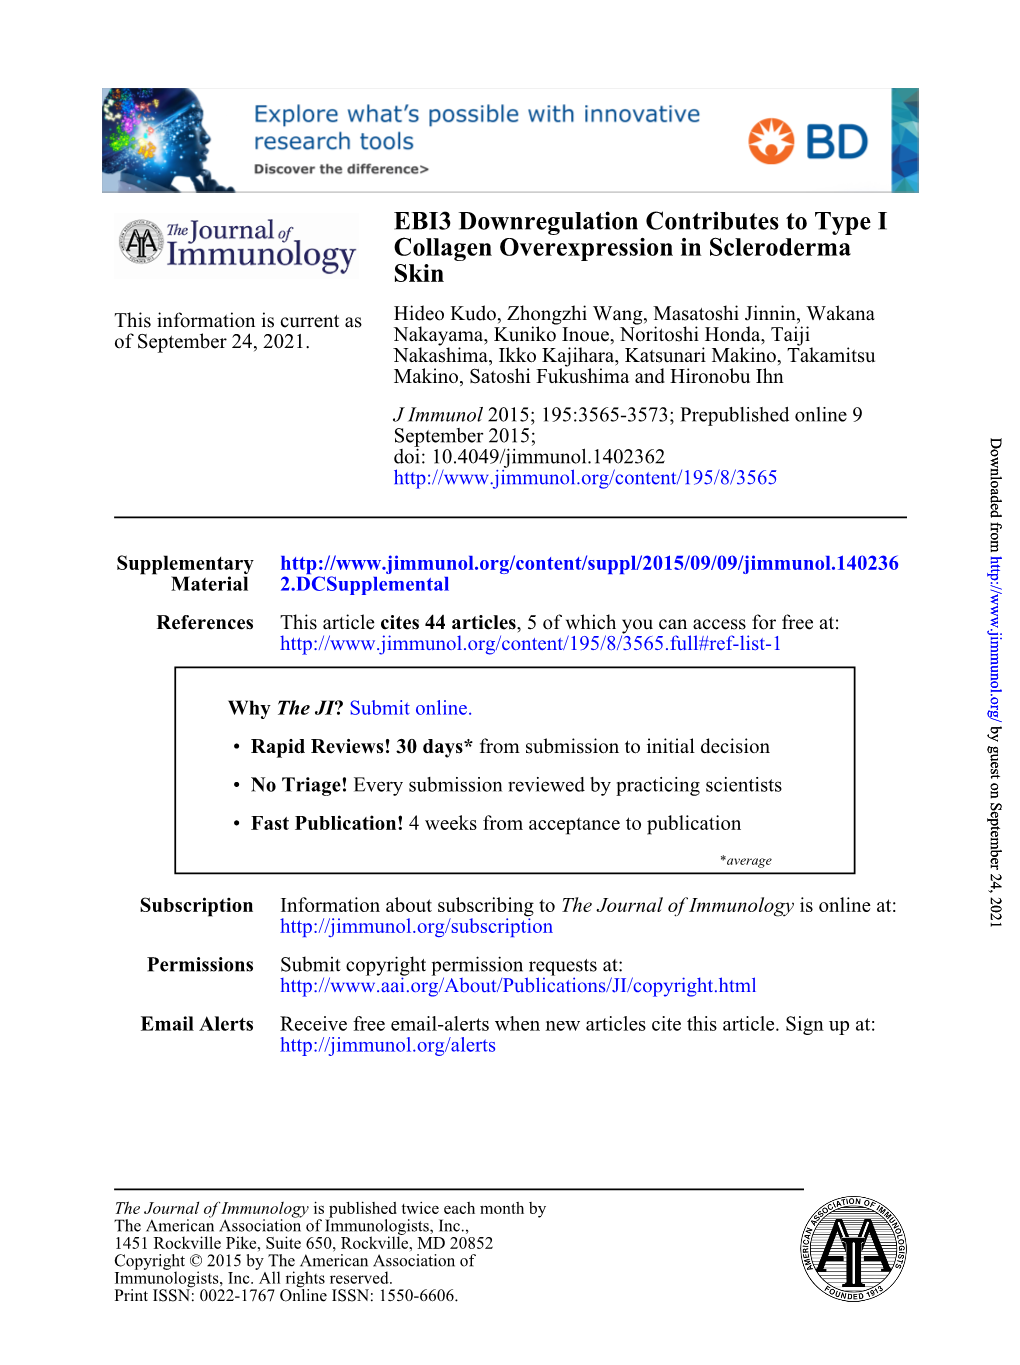 Skin Collagen Overexpression in Scleroderma EBI3 Downregulation